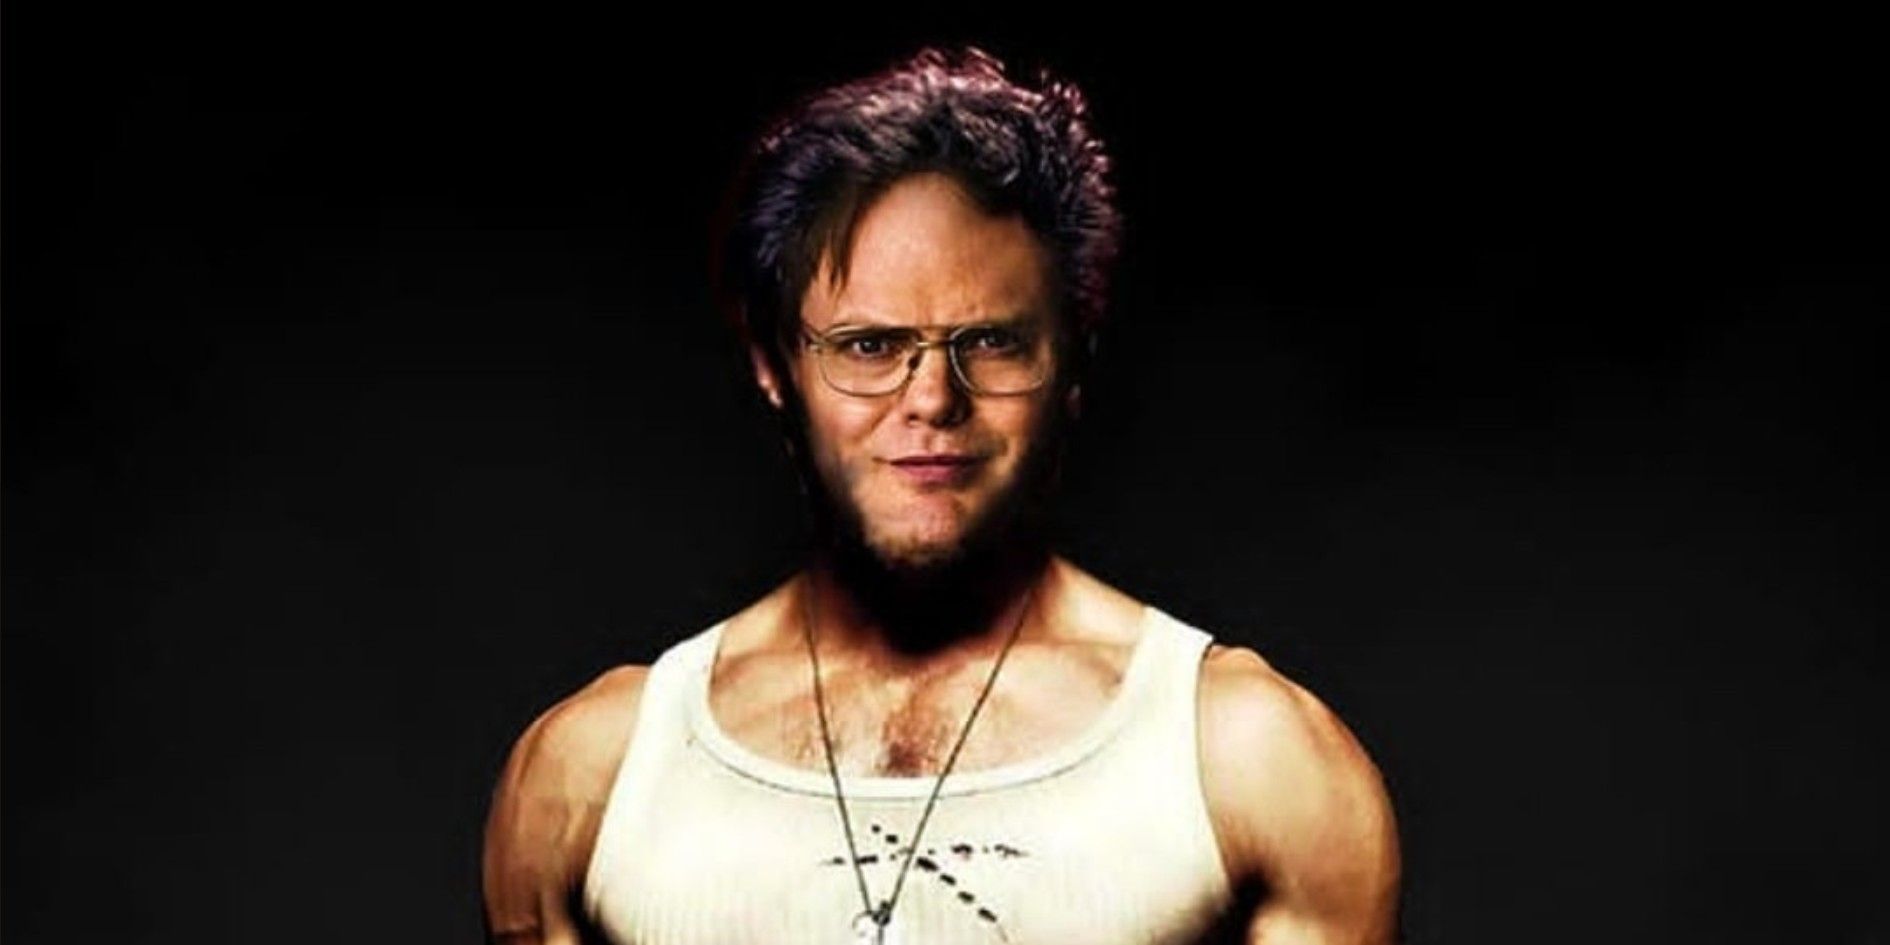 Dwight as Wolverine